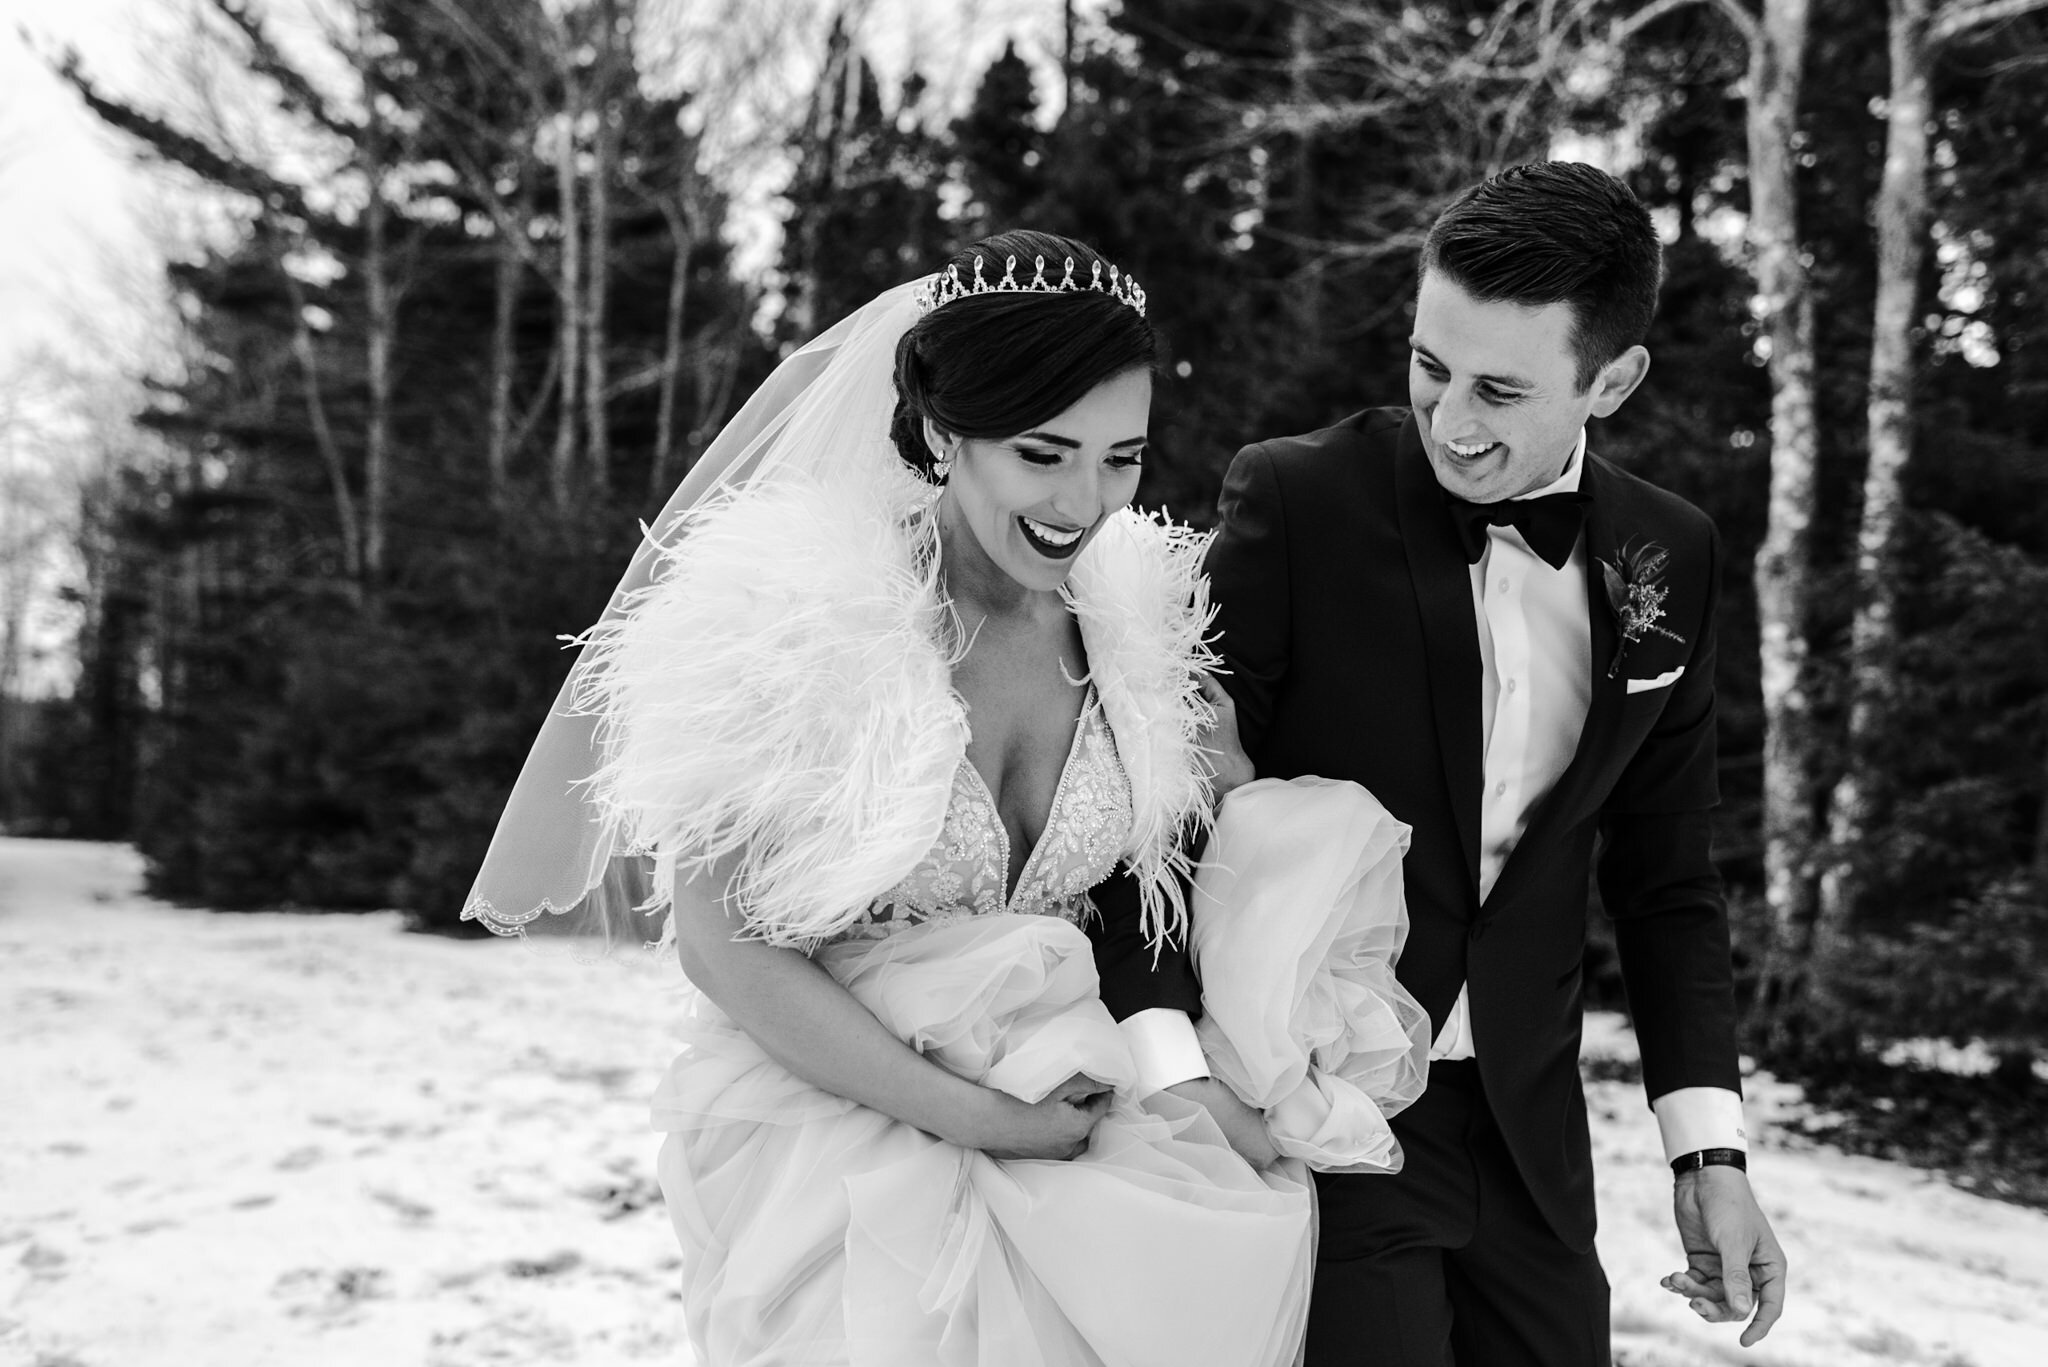 313-east-coast-bride-groom-wedding-portraits-windy-winter-adventure.jpg